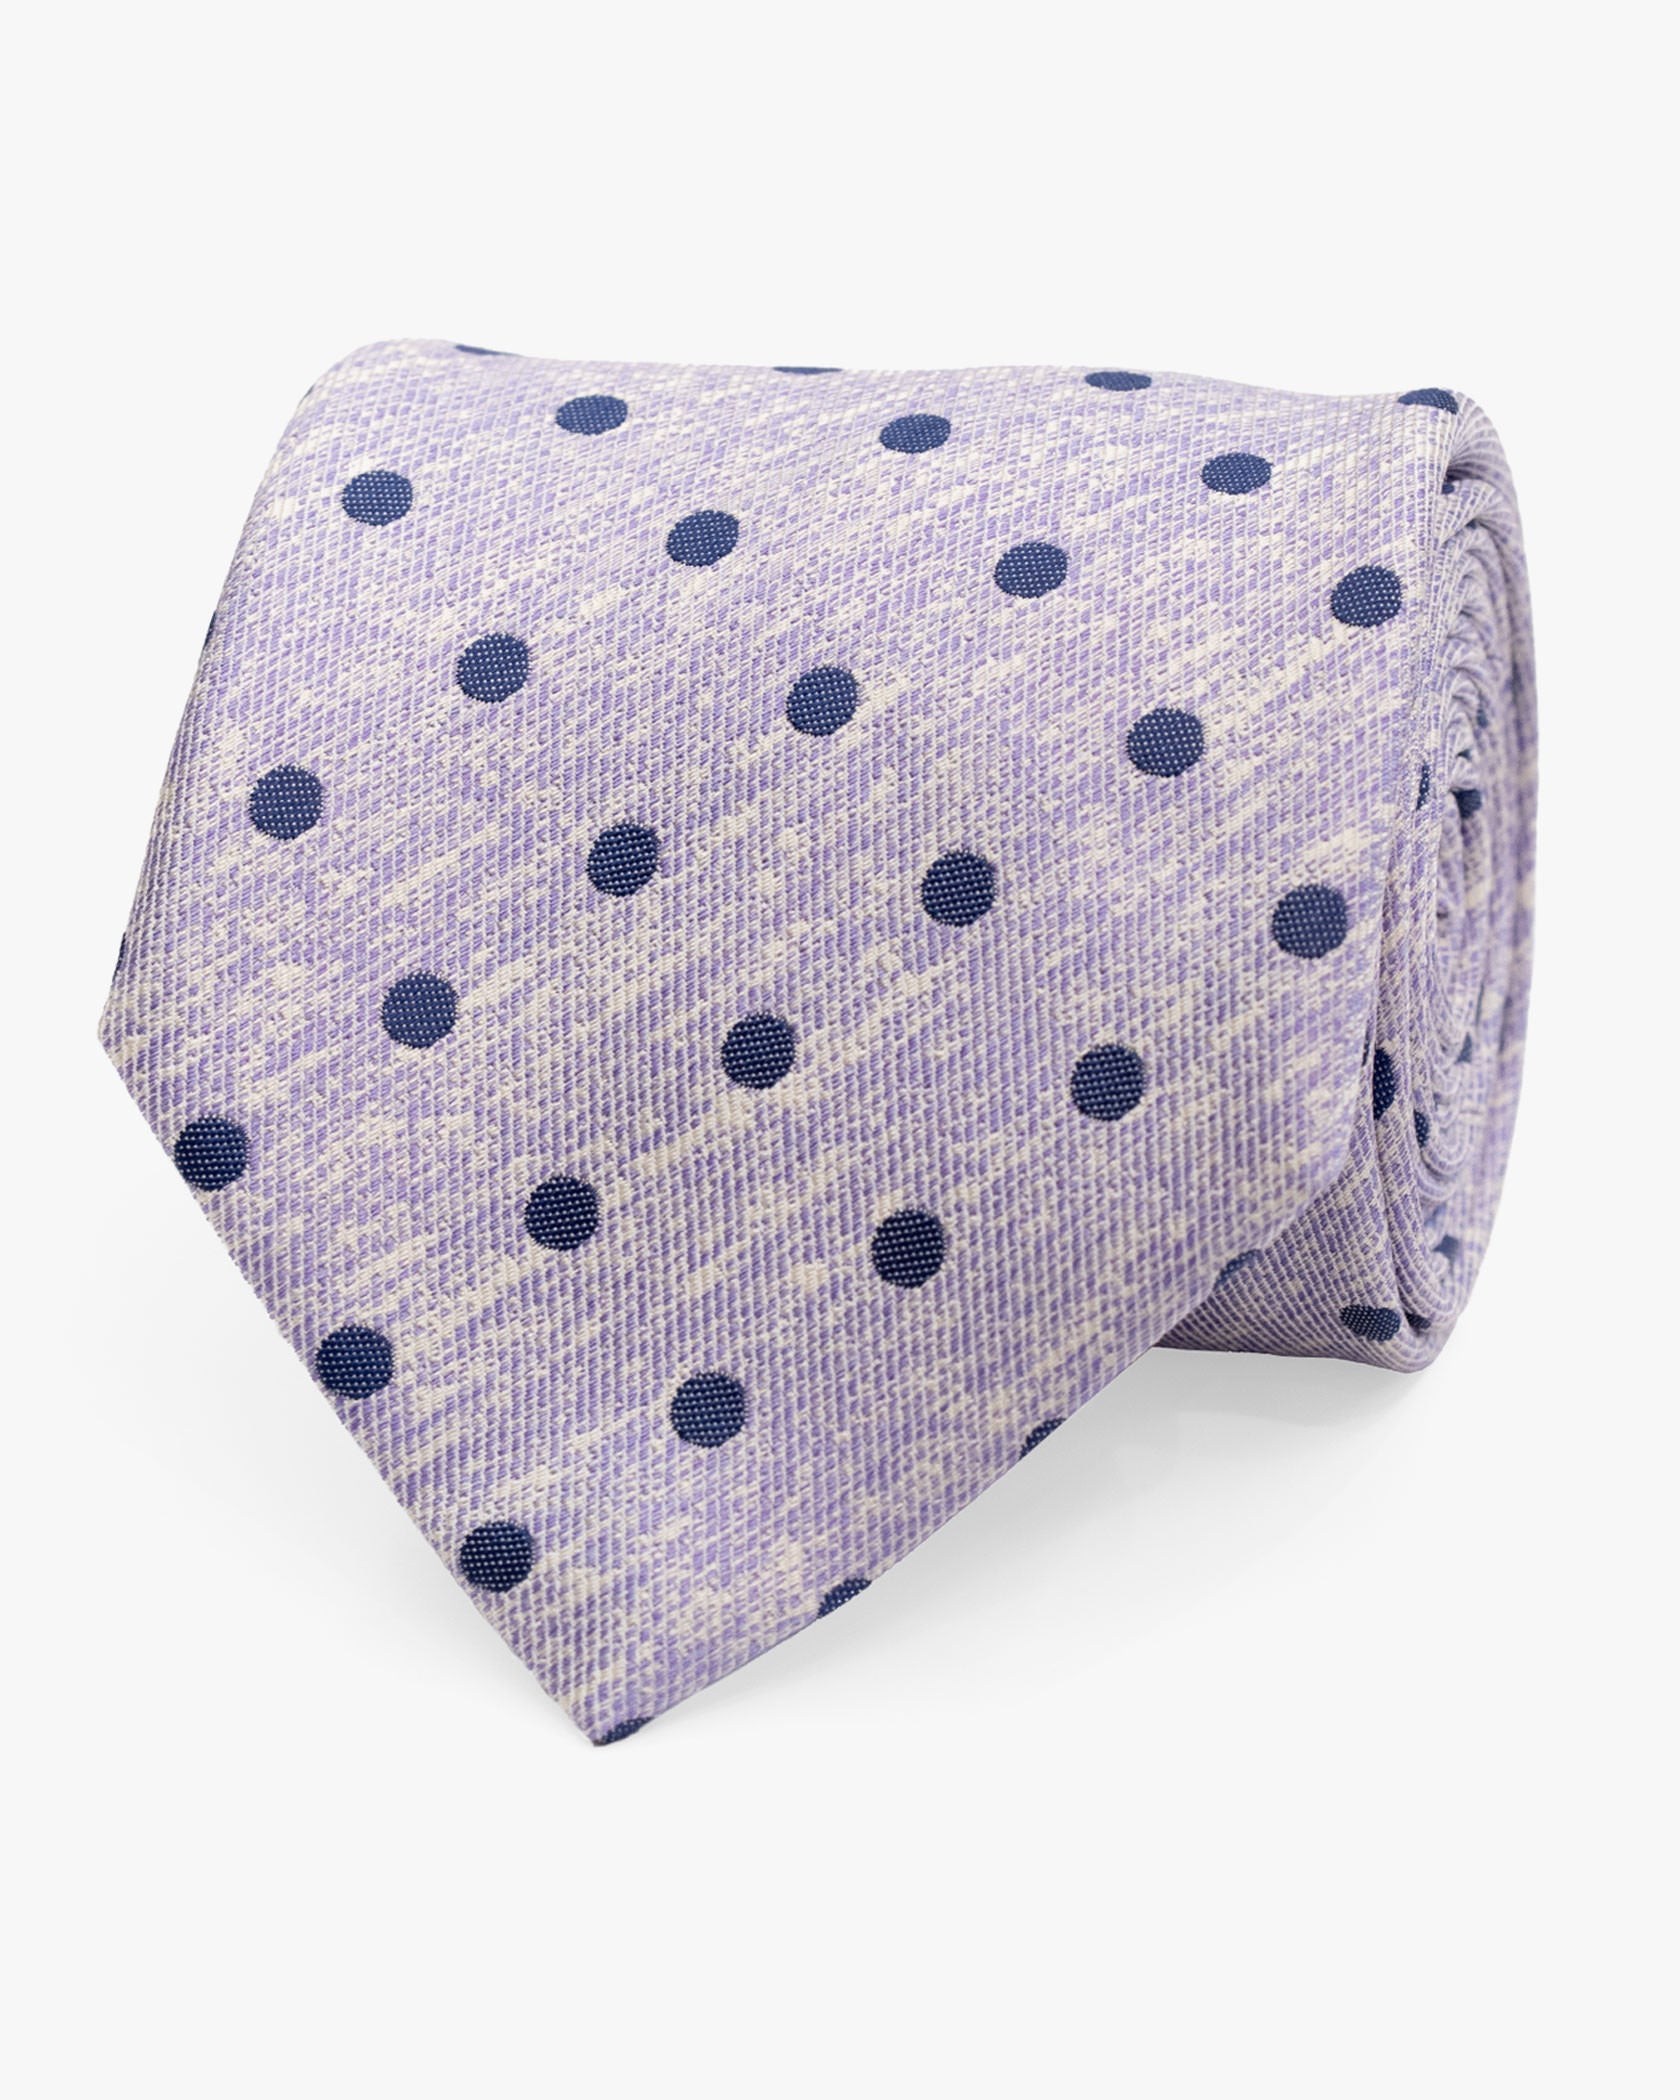 Lavender Necktie with Navy Polka Dots